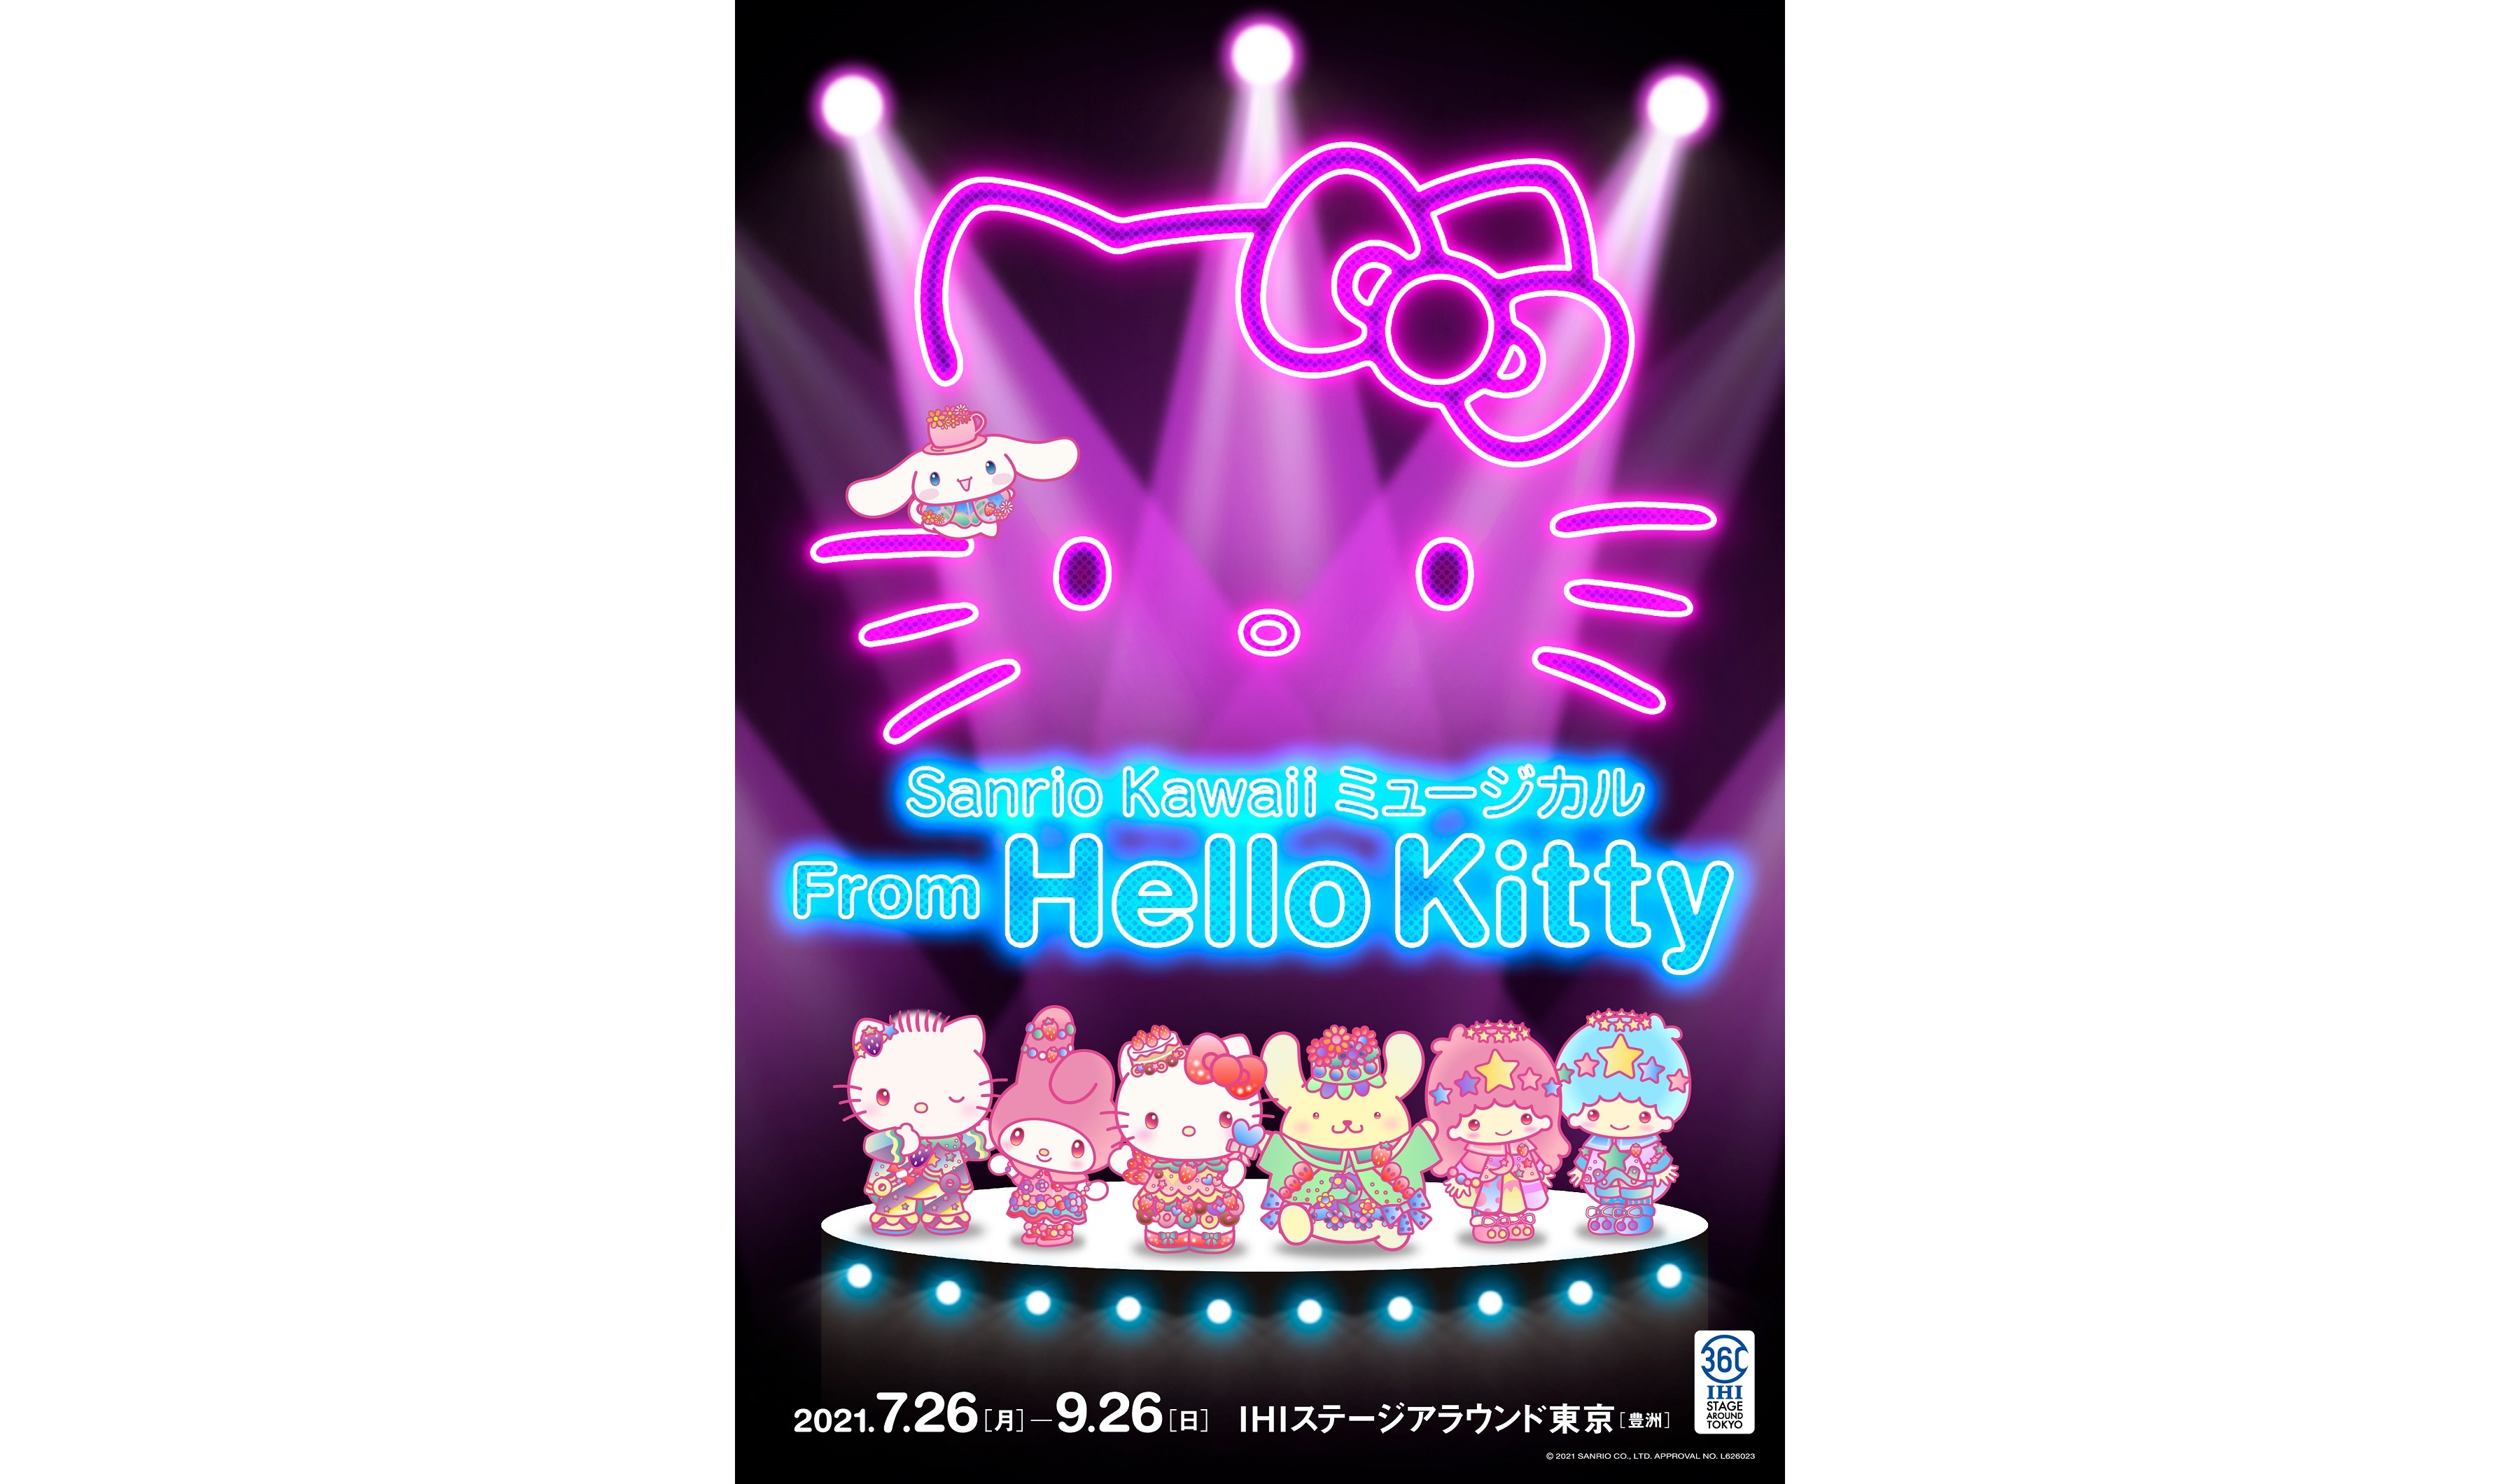 Sanrio Kawaii ミュージカル『From Hello Kitty』1